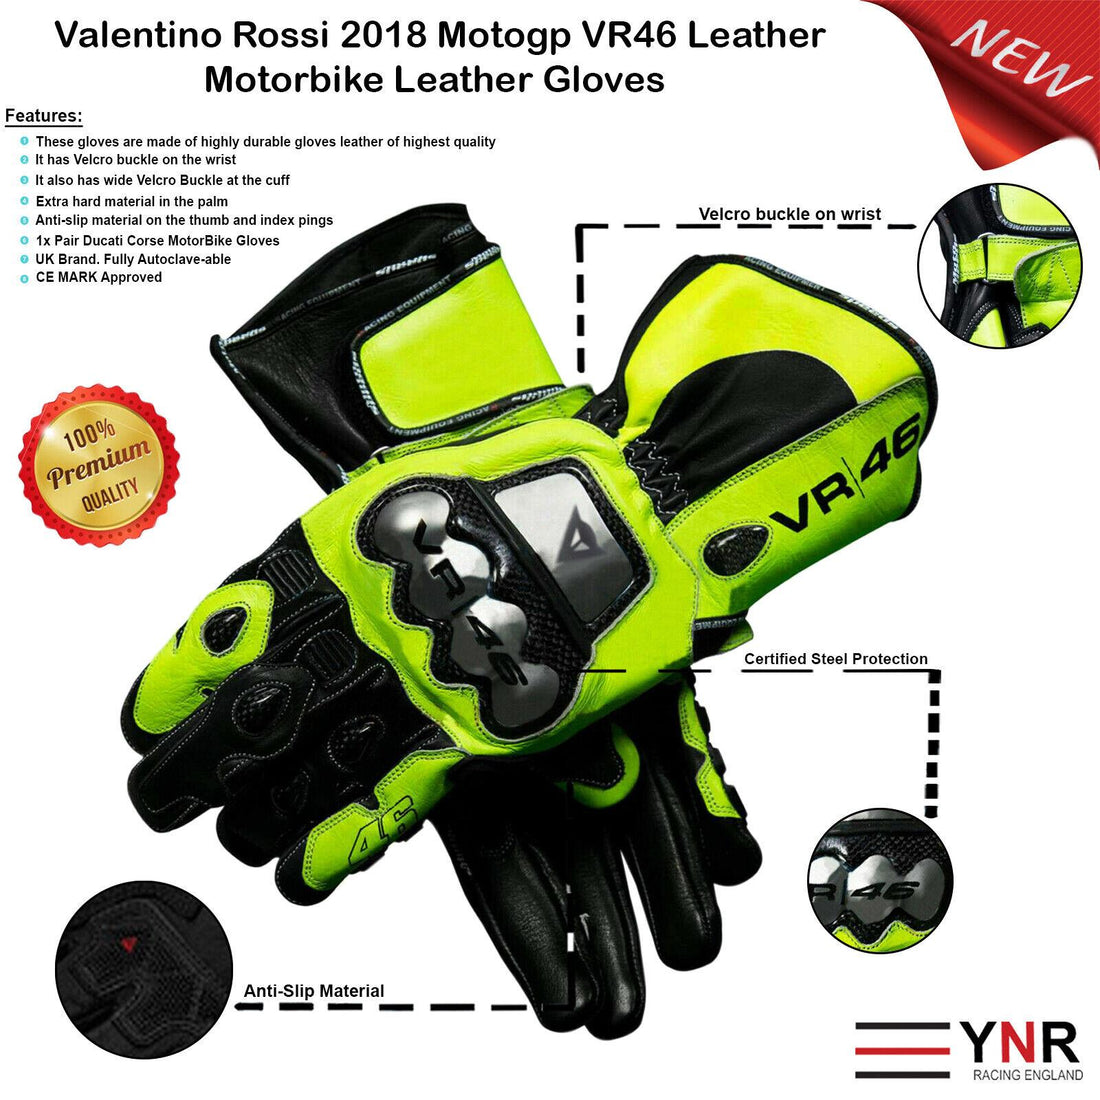 Valentino Rossi 2018 Motogp VR46 Leather Motorbike Leather Gloves